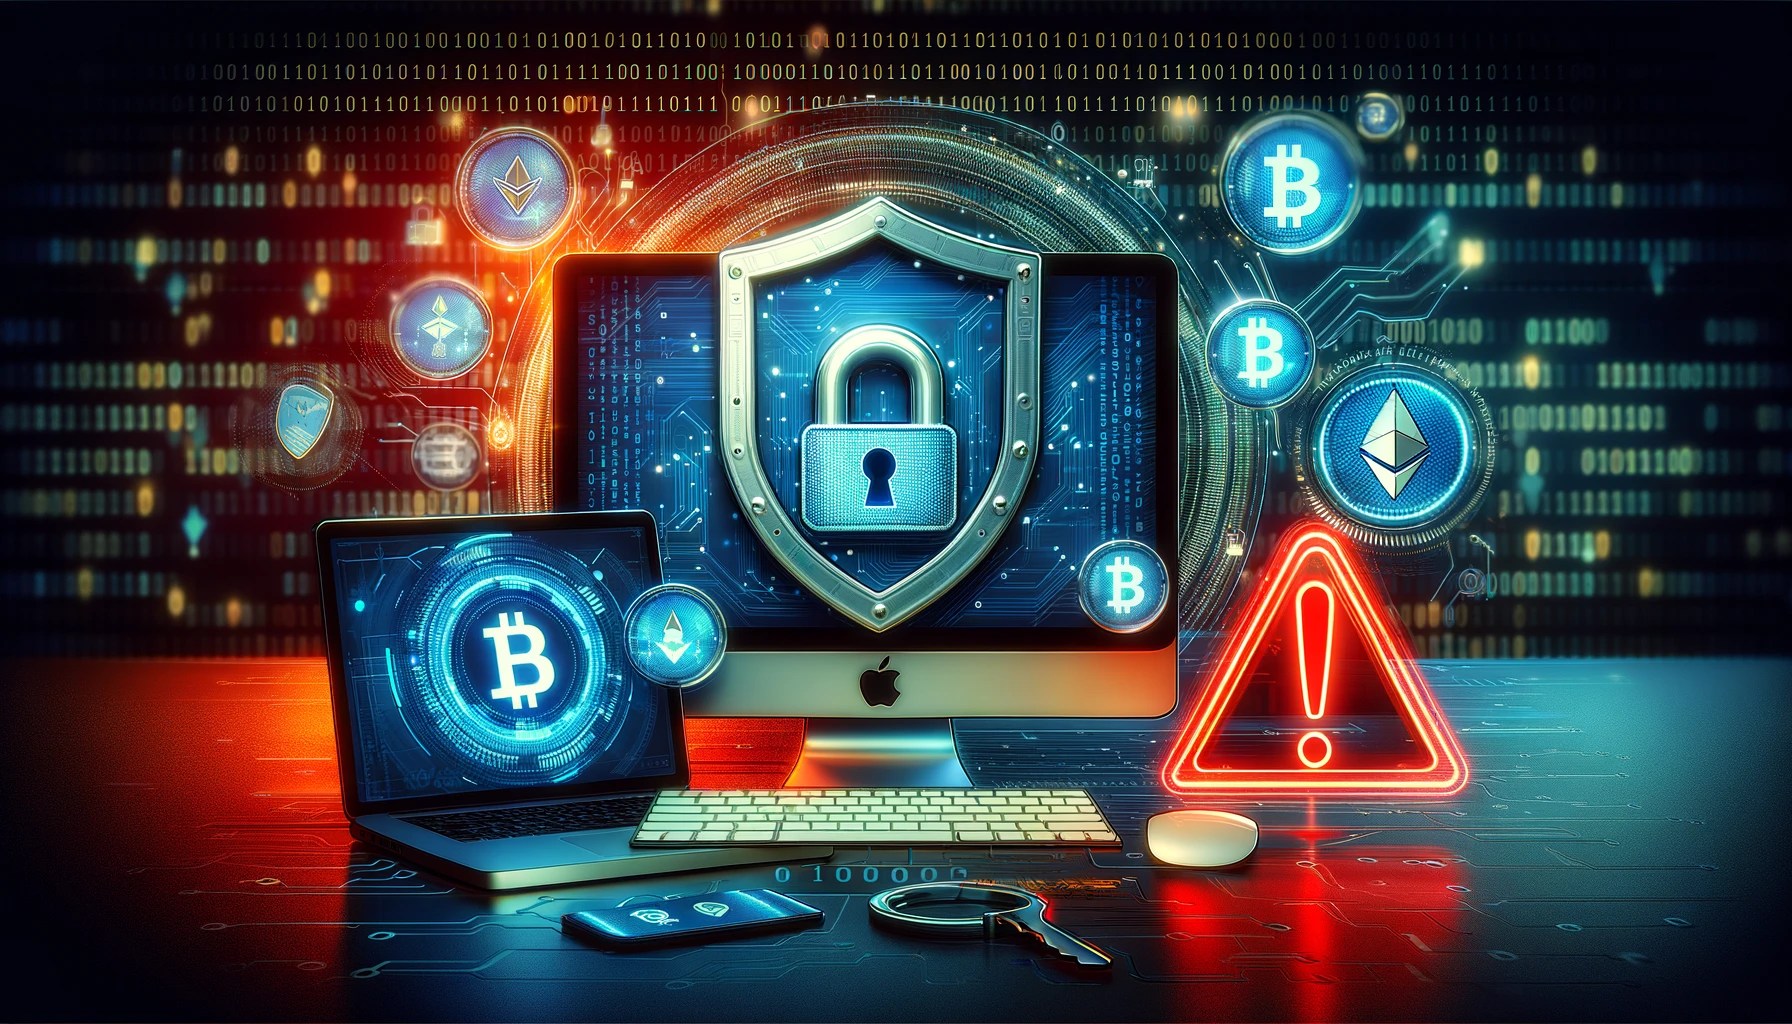 Apple mac vulnerability Bitcoin crypto private keys